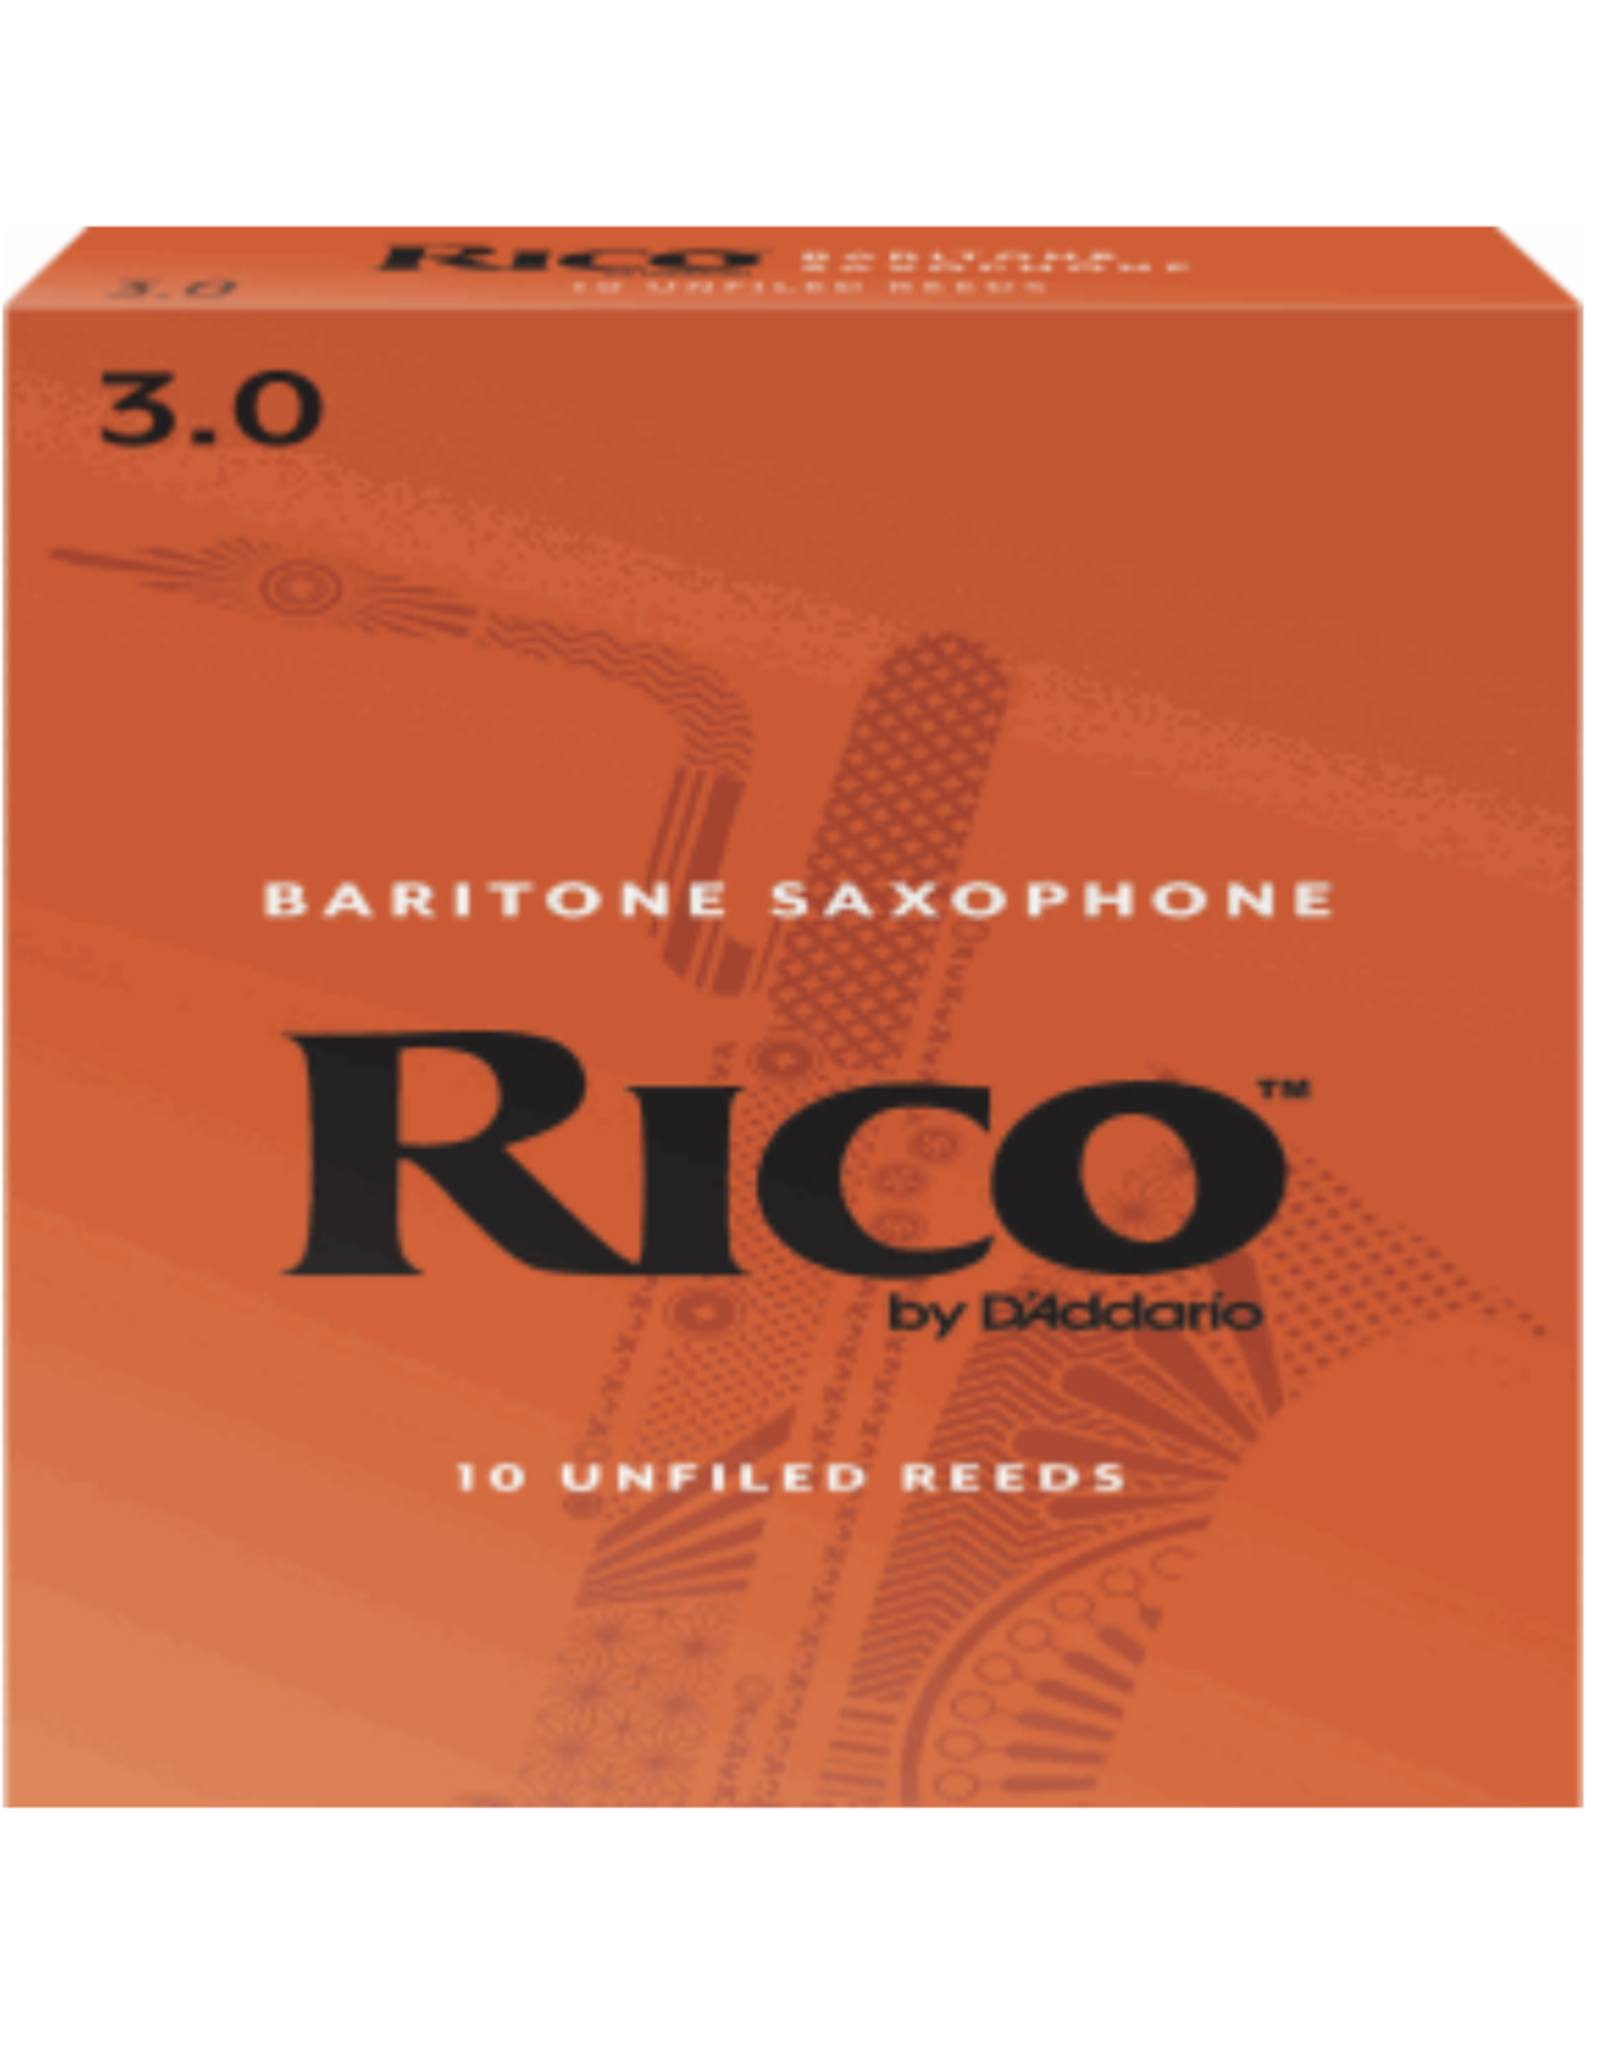 D'Addario Rico by D'Addario Baritone Sax Reeds